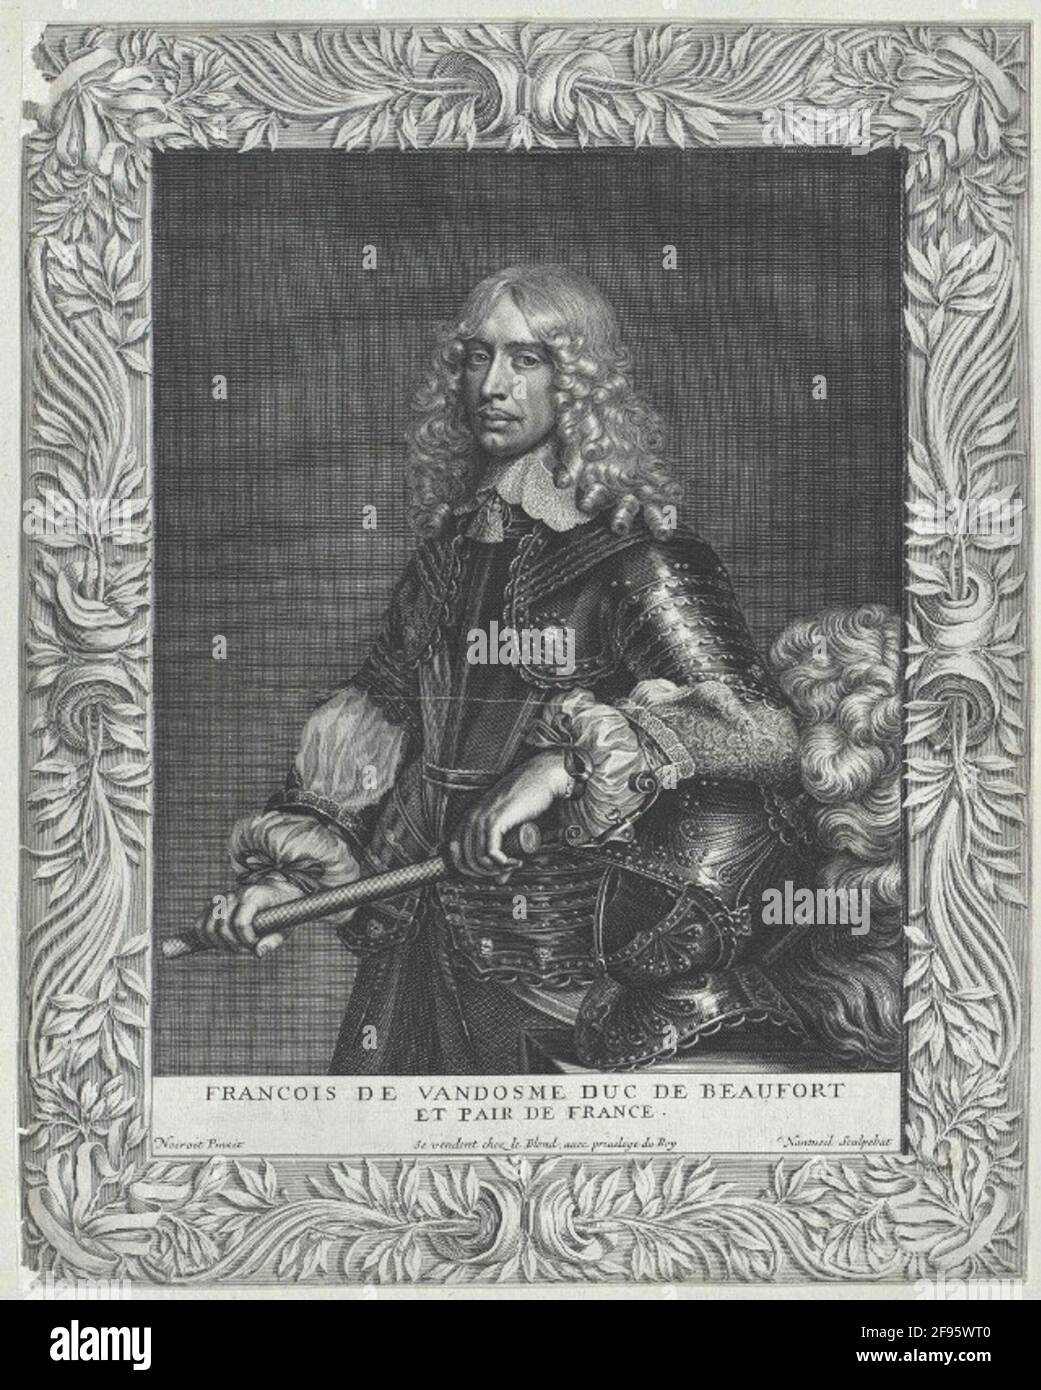 Vendôme, Duc de Beaufort, François de Stecher: Nanteuil, Robertdaterung: 1647/1678 Foto Stock